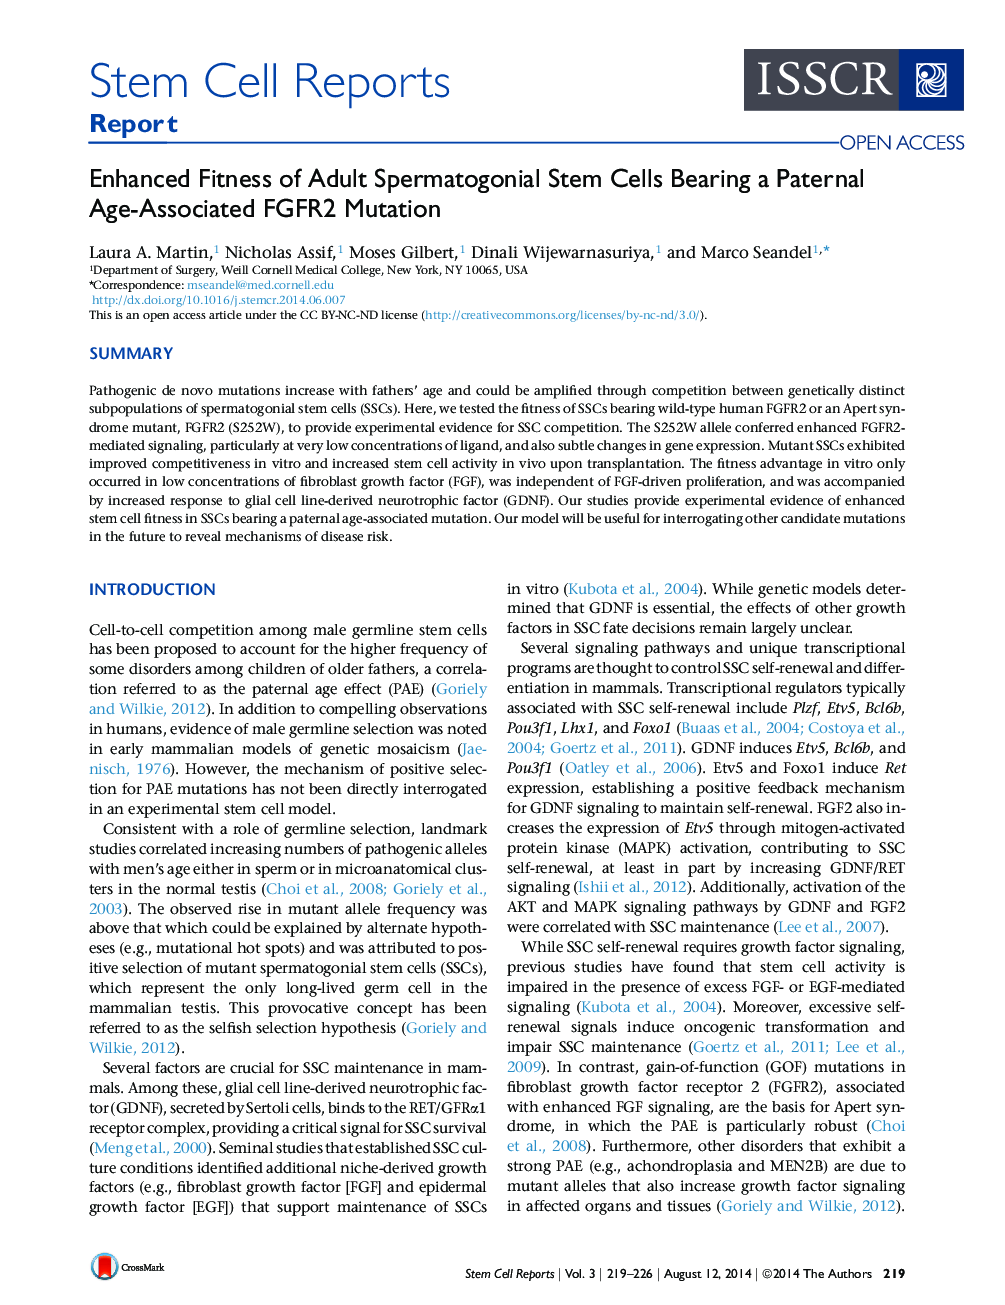 Enhanced Fitness of Adult Spermatogonial Stem Cells Bearing a Paternal Age-Associated FGFR2 Mutation 